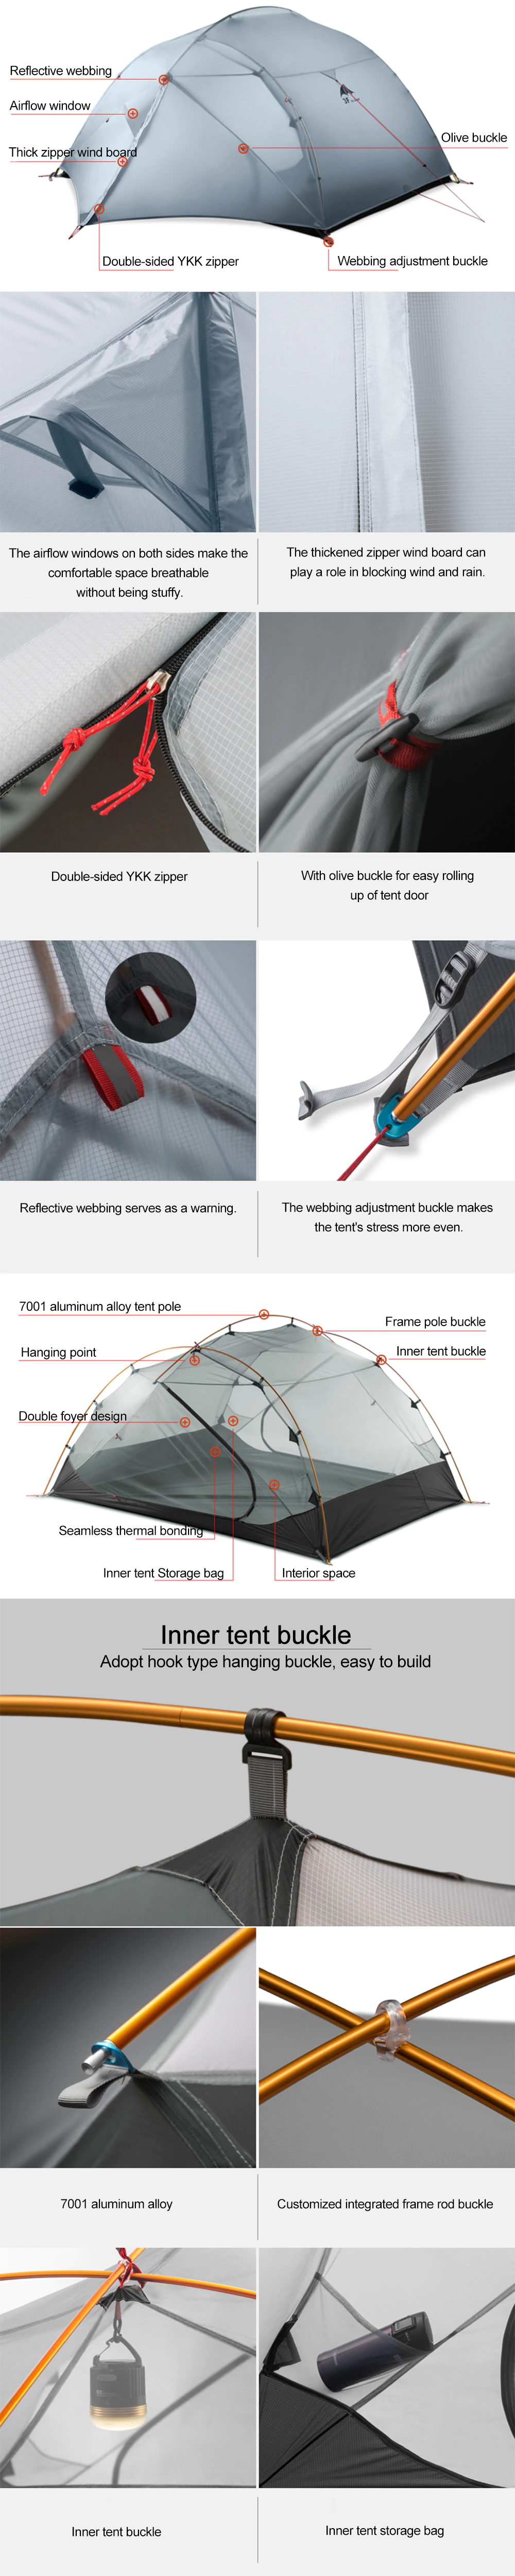 Cheap Goat Tents 3f Ul Gear Qingkong 15d 4 Season 3 Person Camping Tent Outdoor Ultralight Hiking Backpacking Waterproof Tents